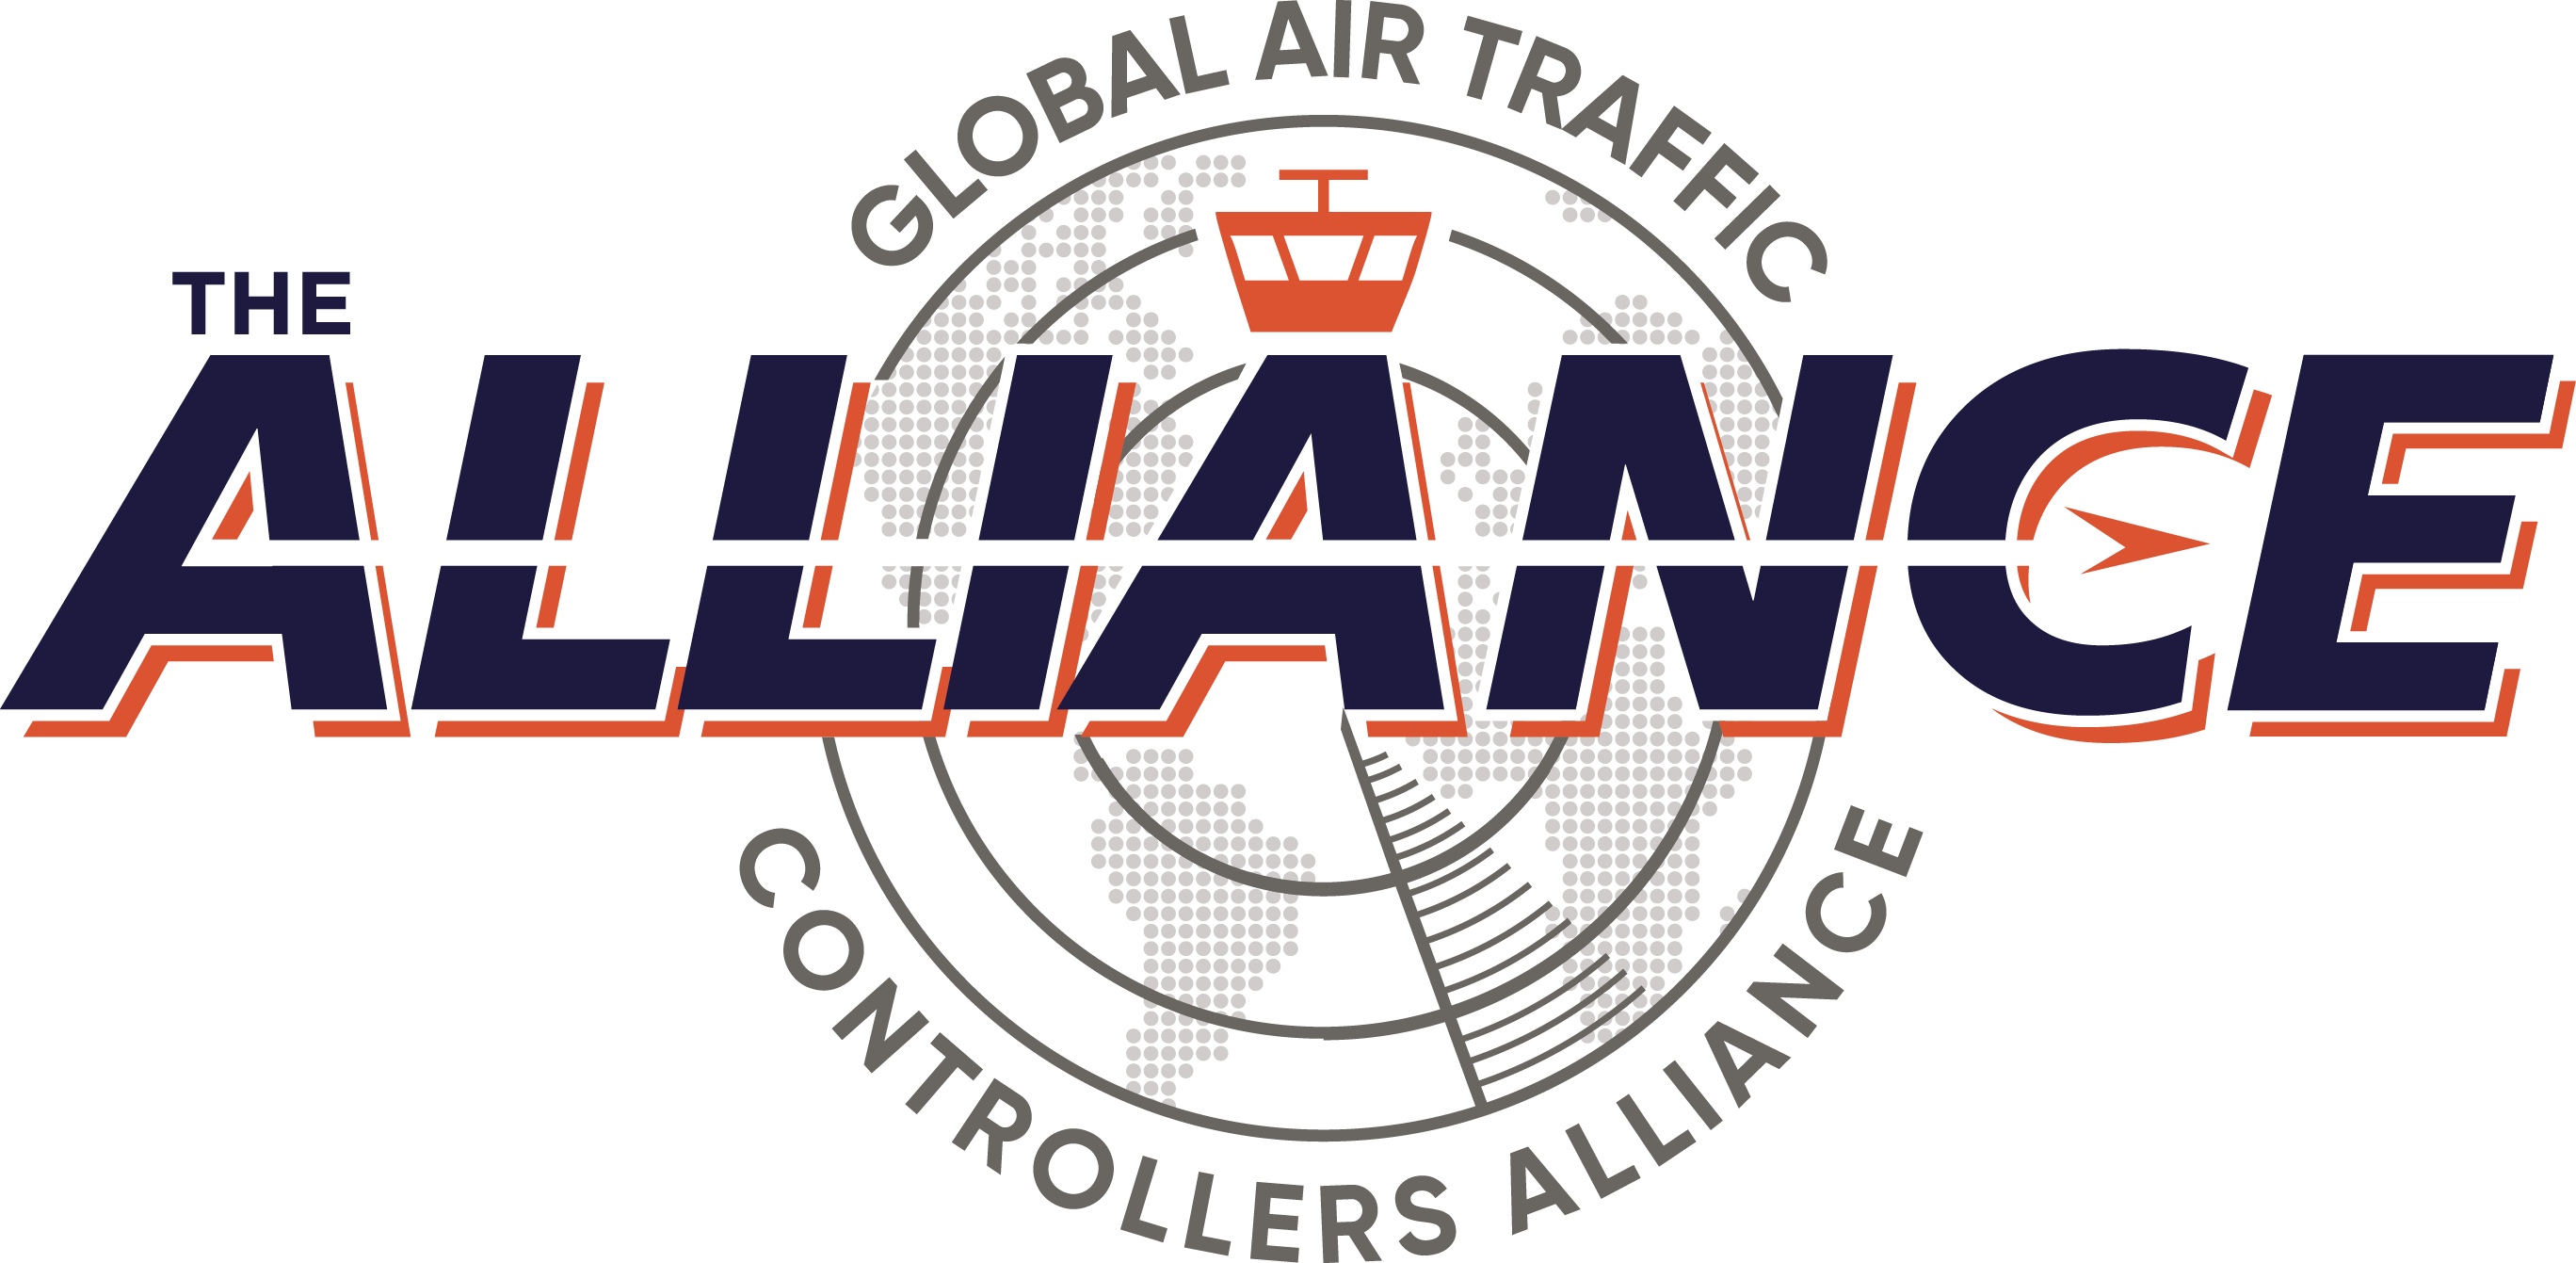 Global Air Traffic Controllers Alliance